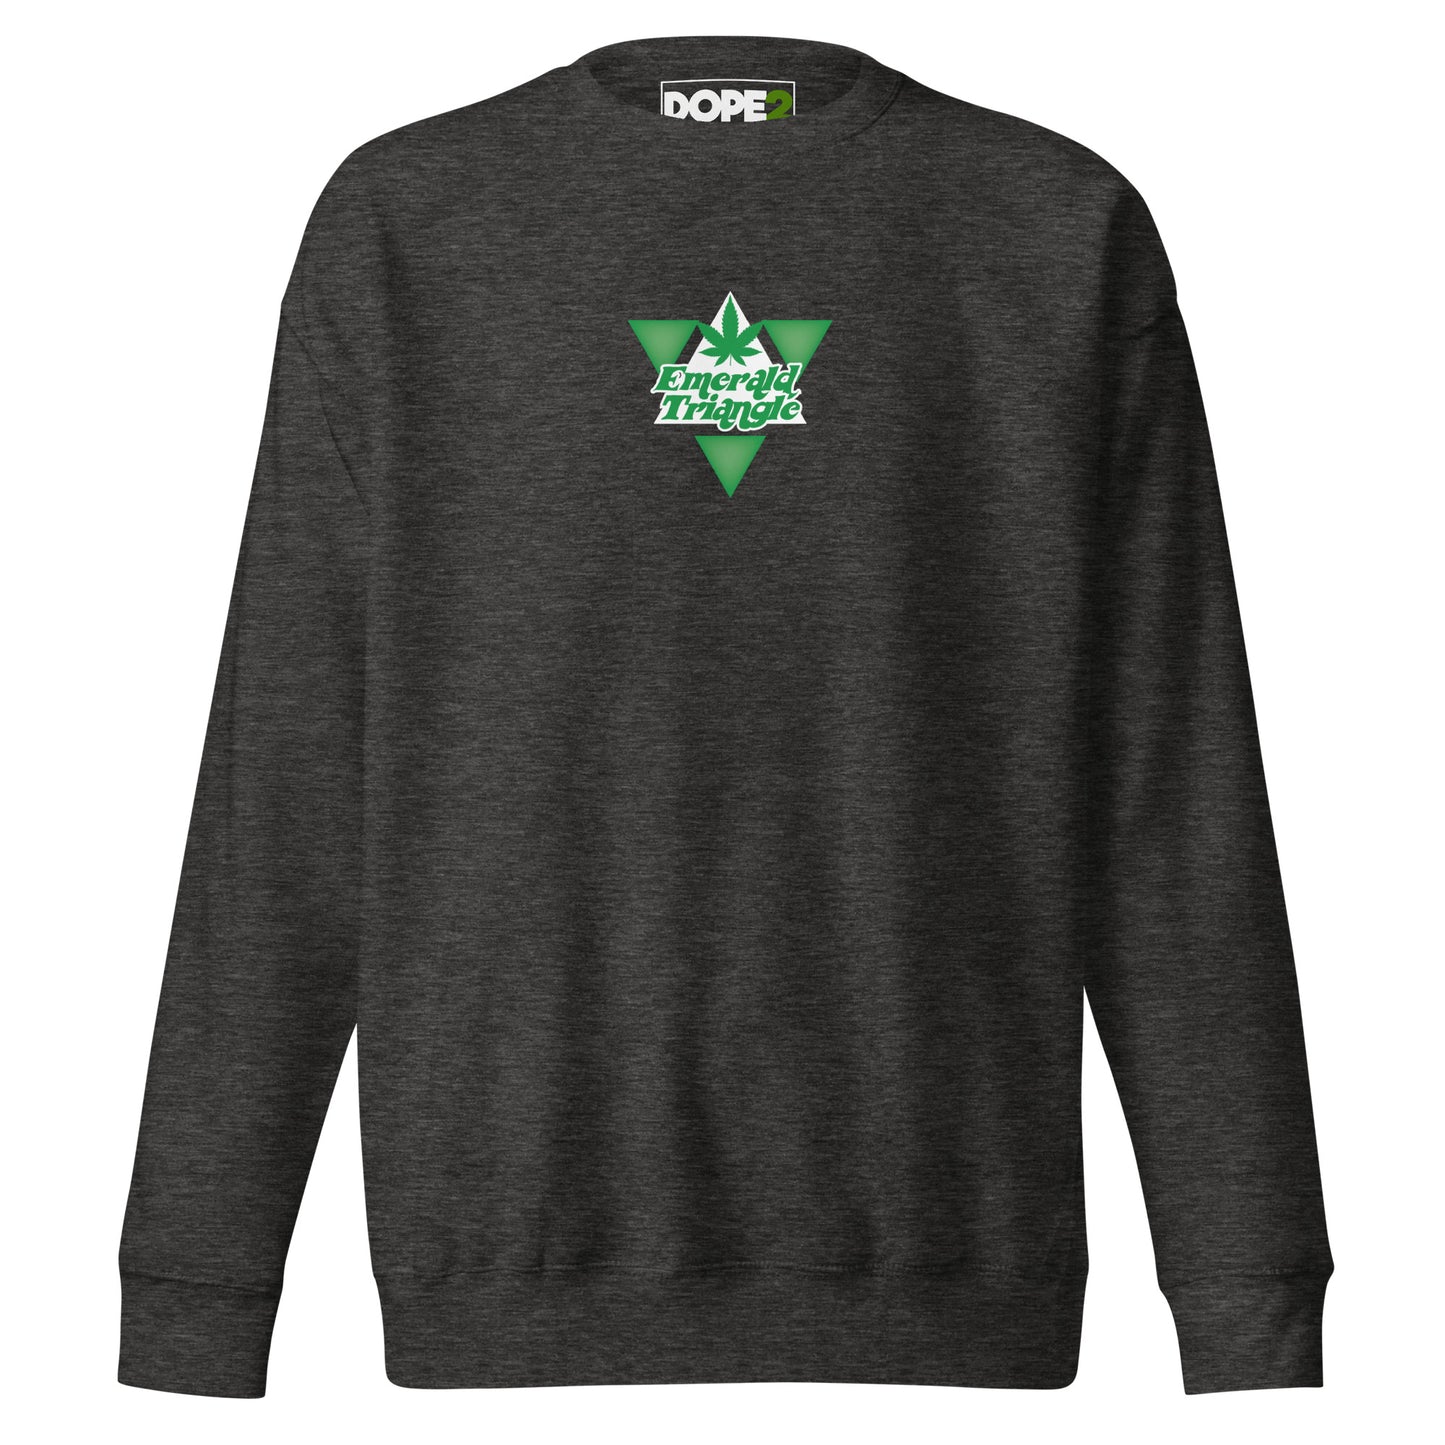 Emerald Triangle Premium Sweatshirt